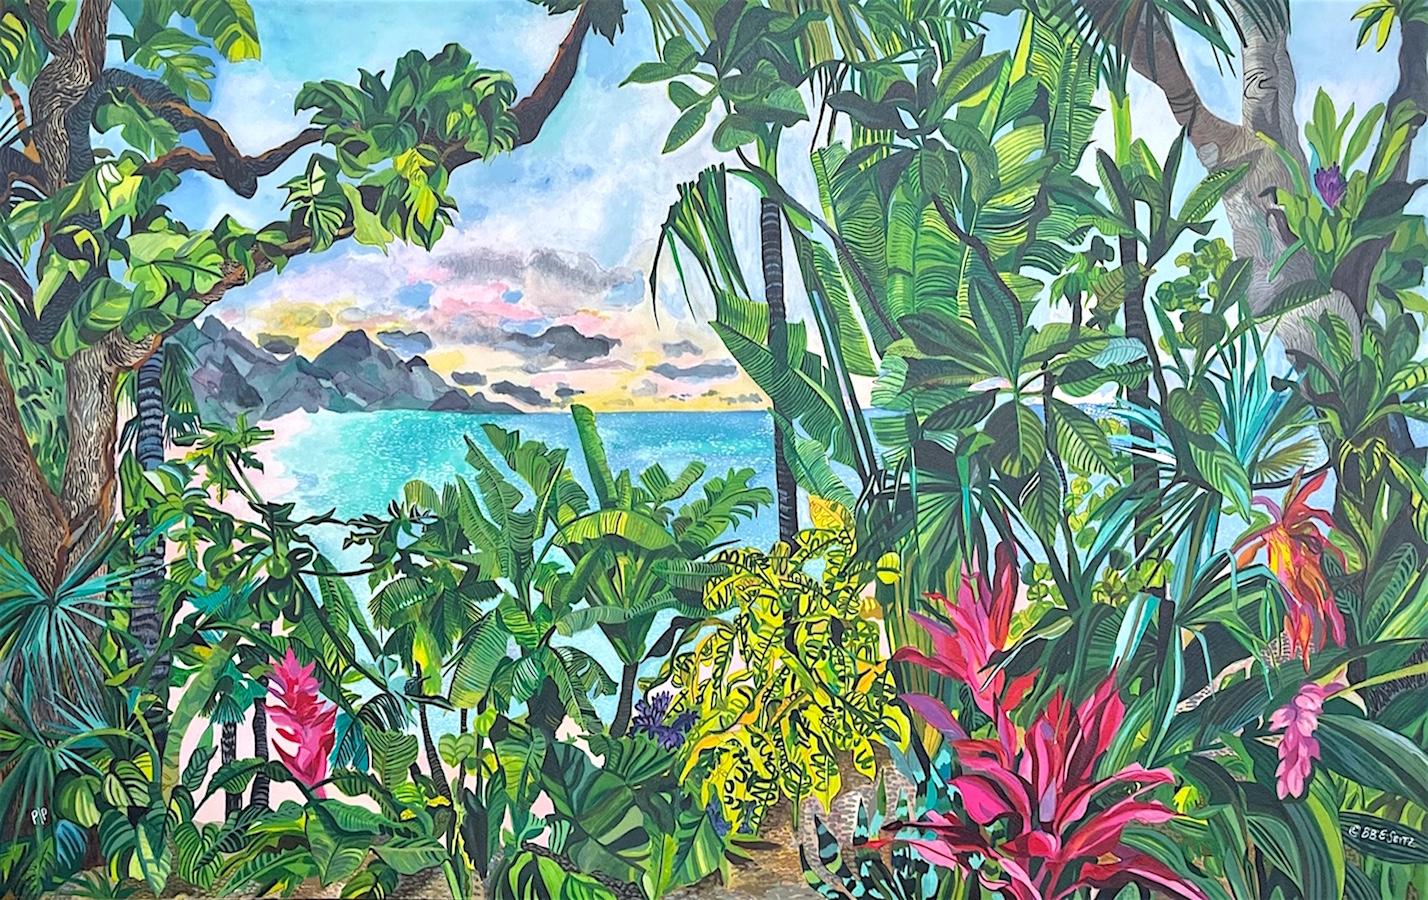 BEYOND EARTHS BEAUTY Signed Handmade Lithograph Island Landscape Tropical Plants